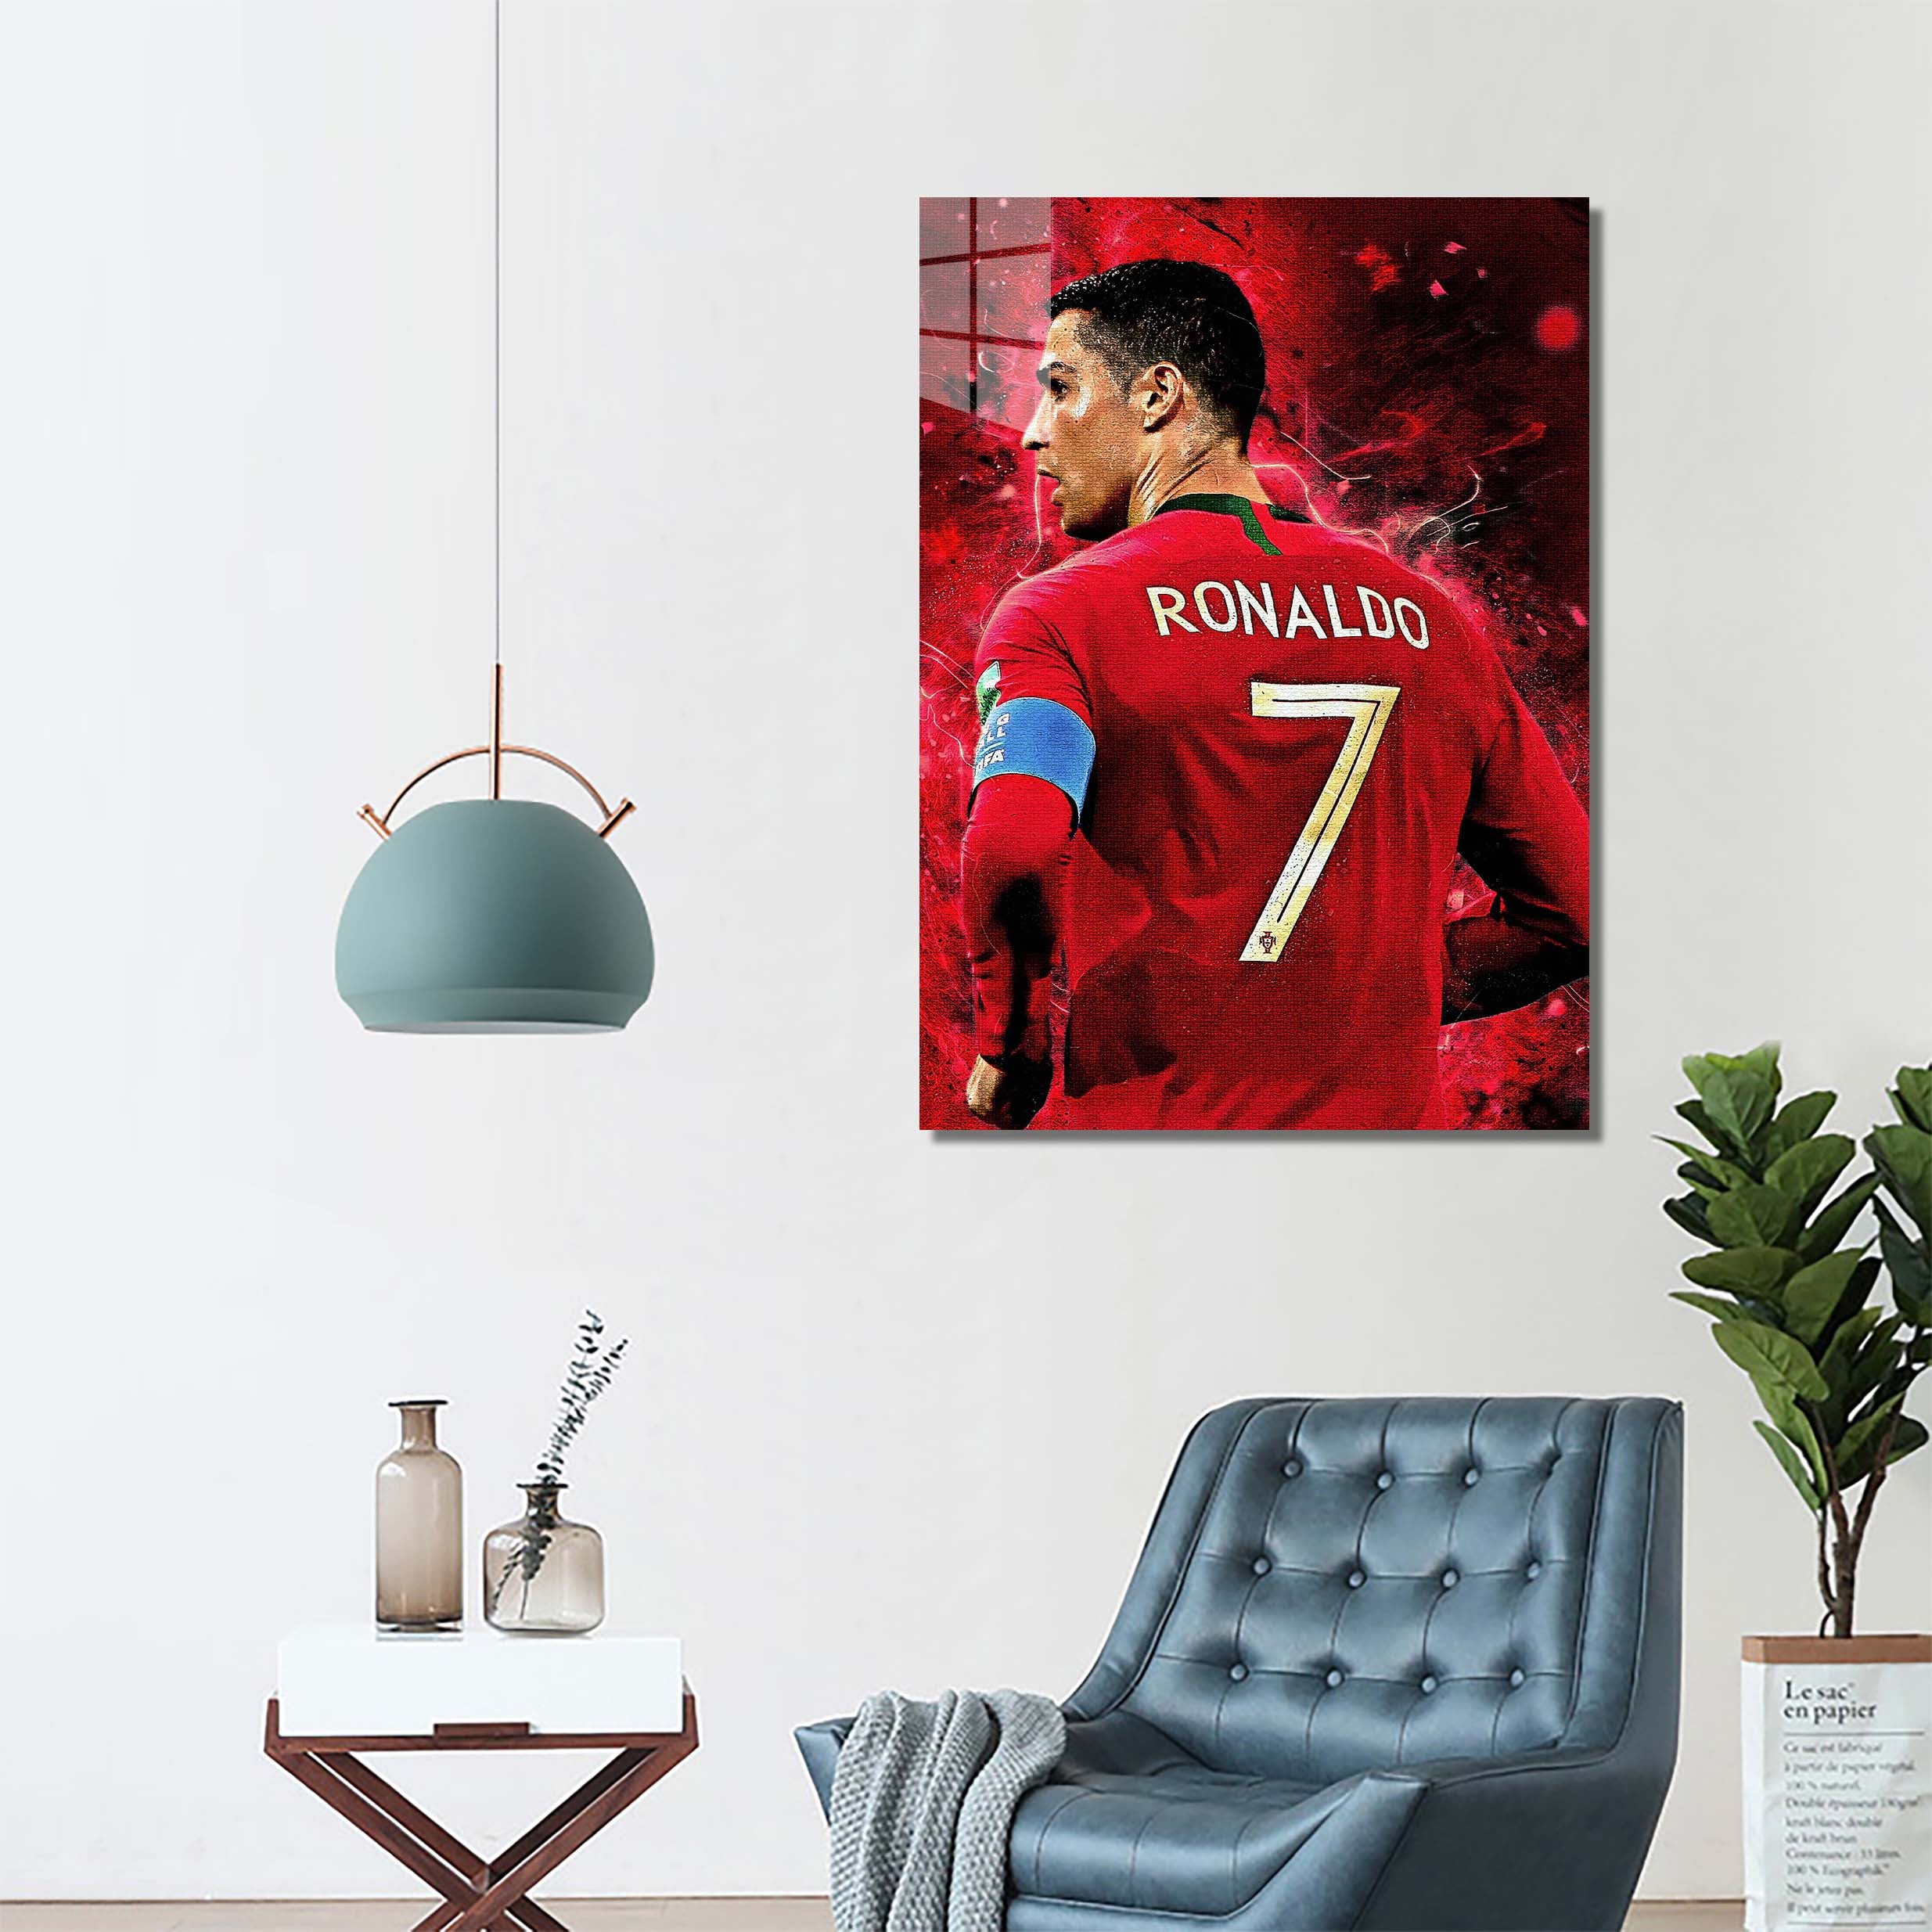 Ronaldo Cristiano-designed by @DynCreative